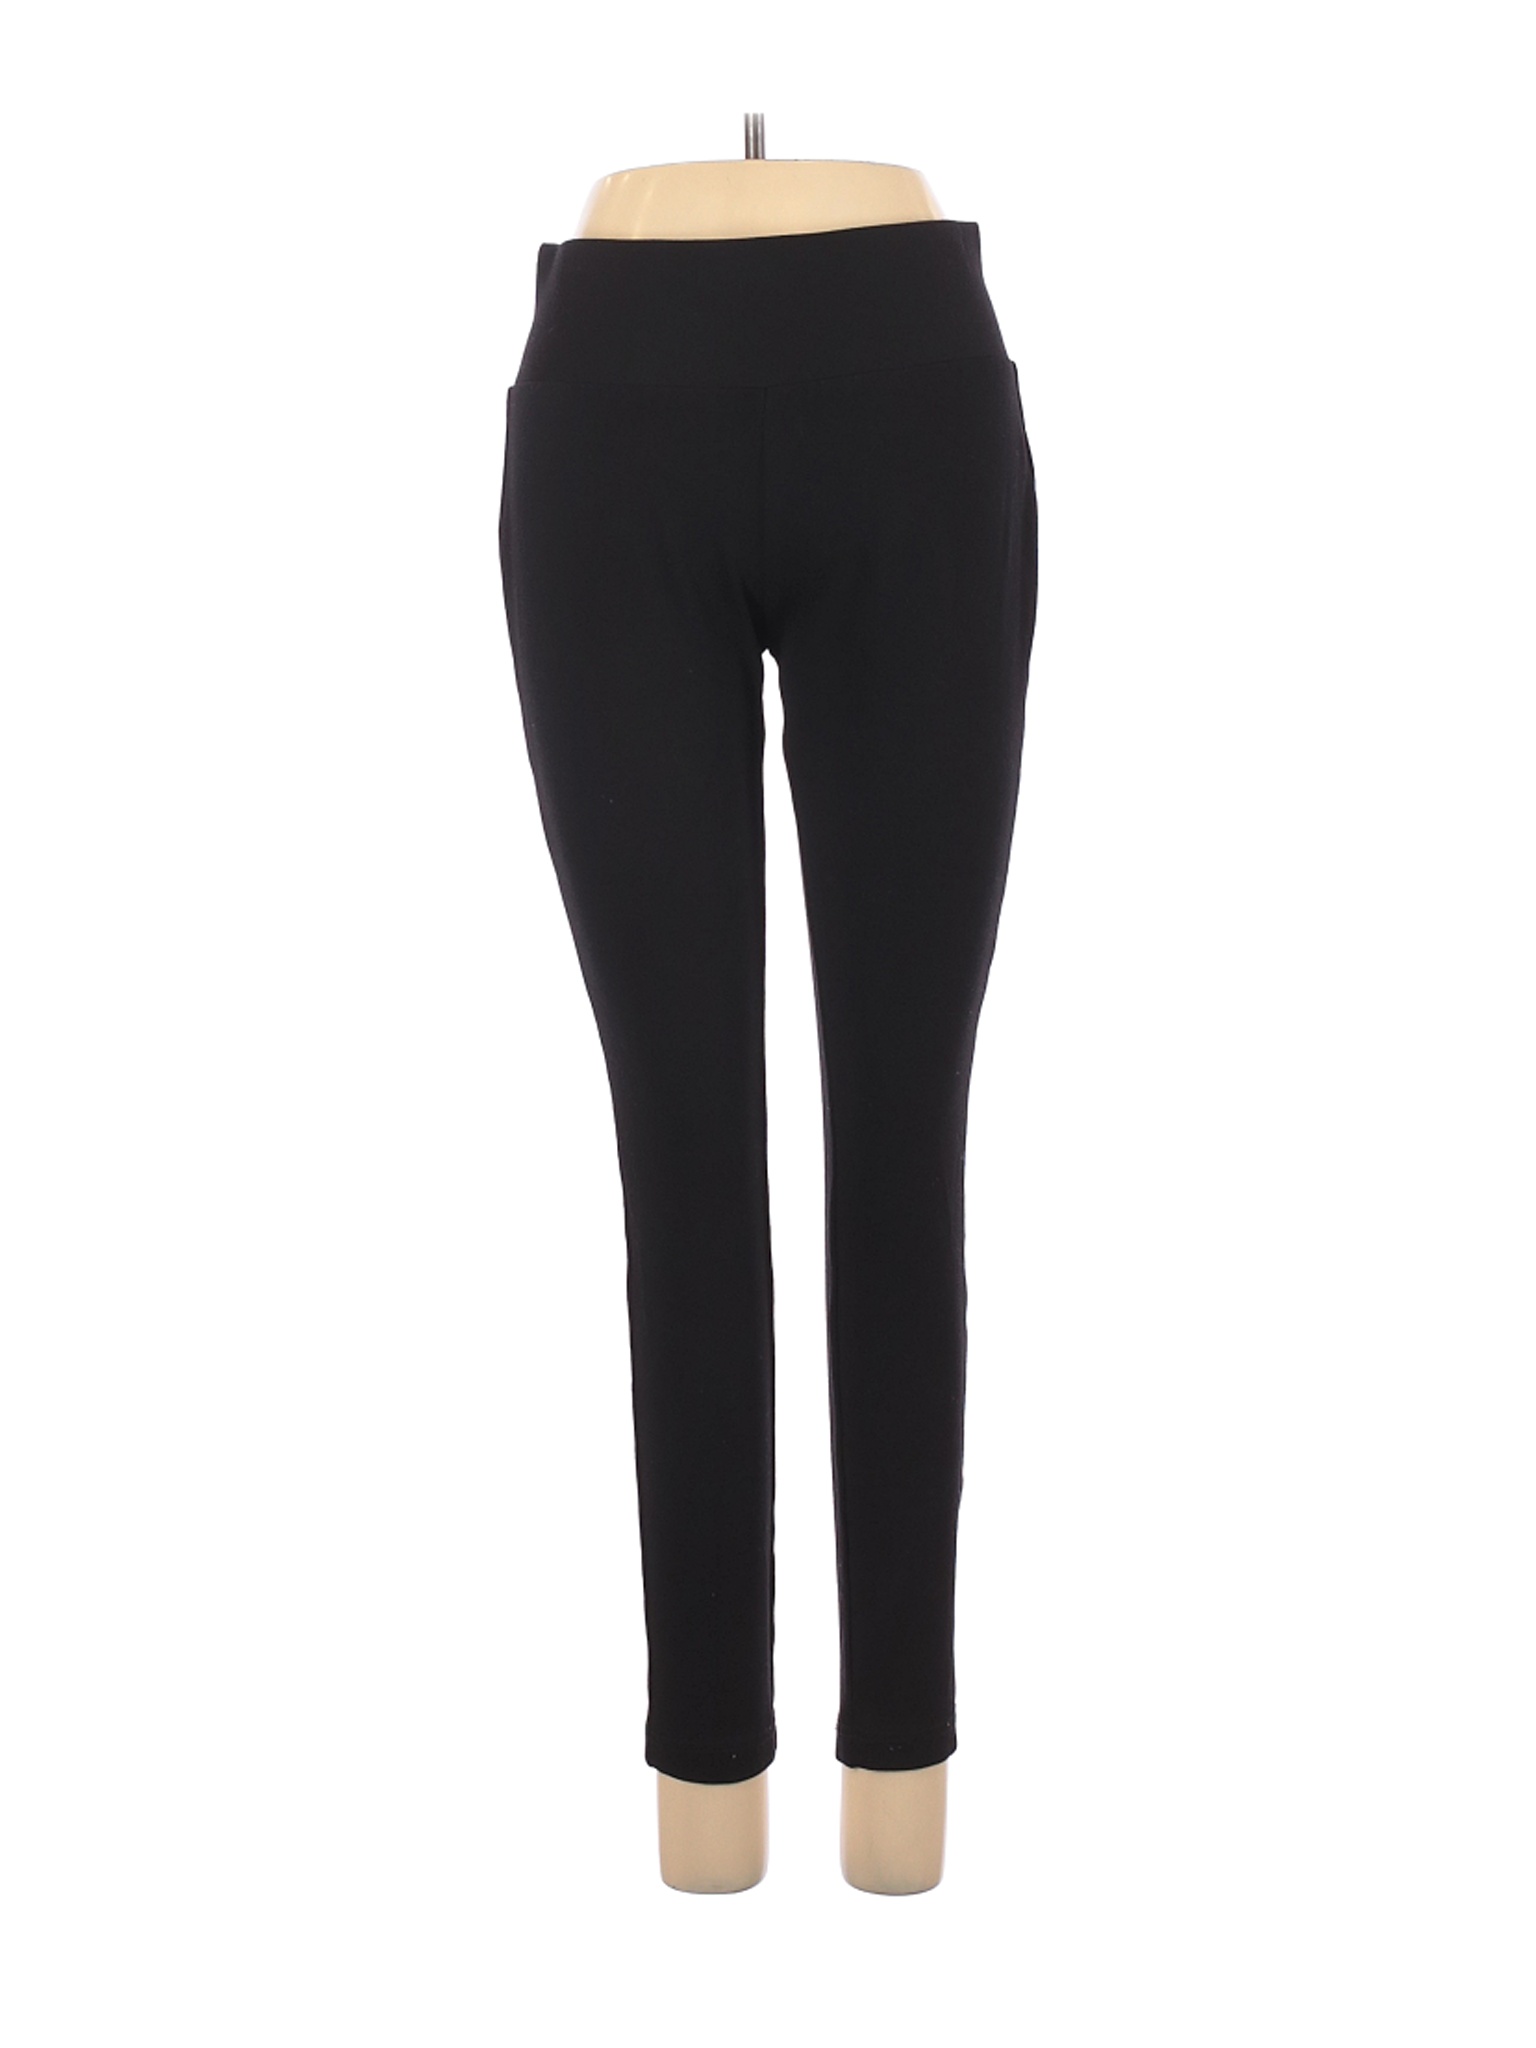 PREMISE Women Black Casual Pants S | eBay